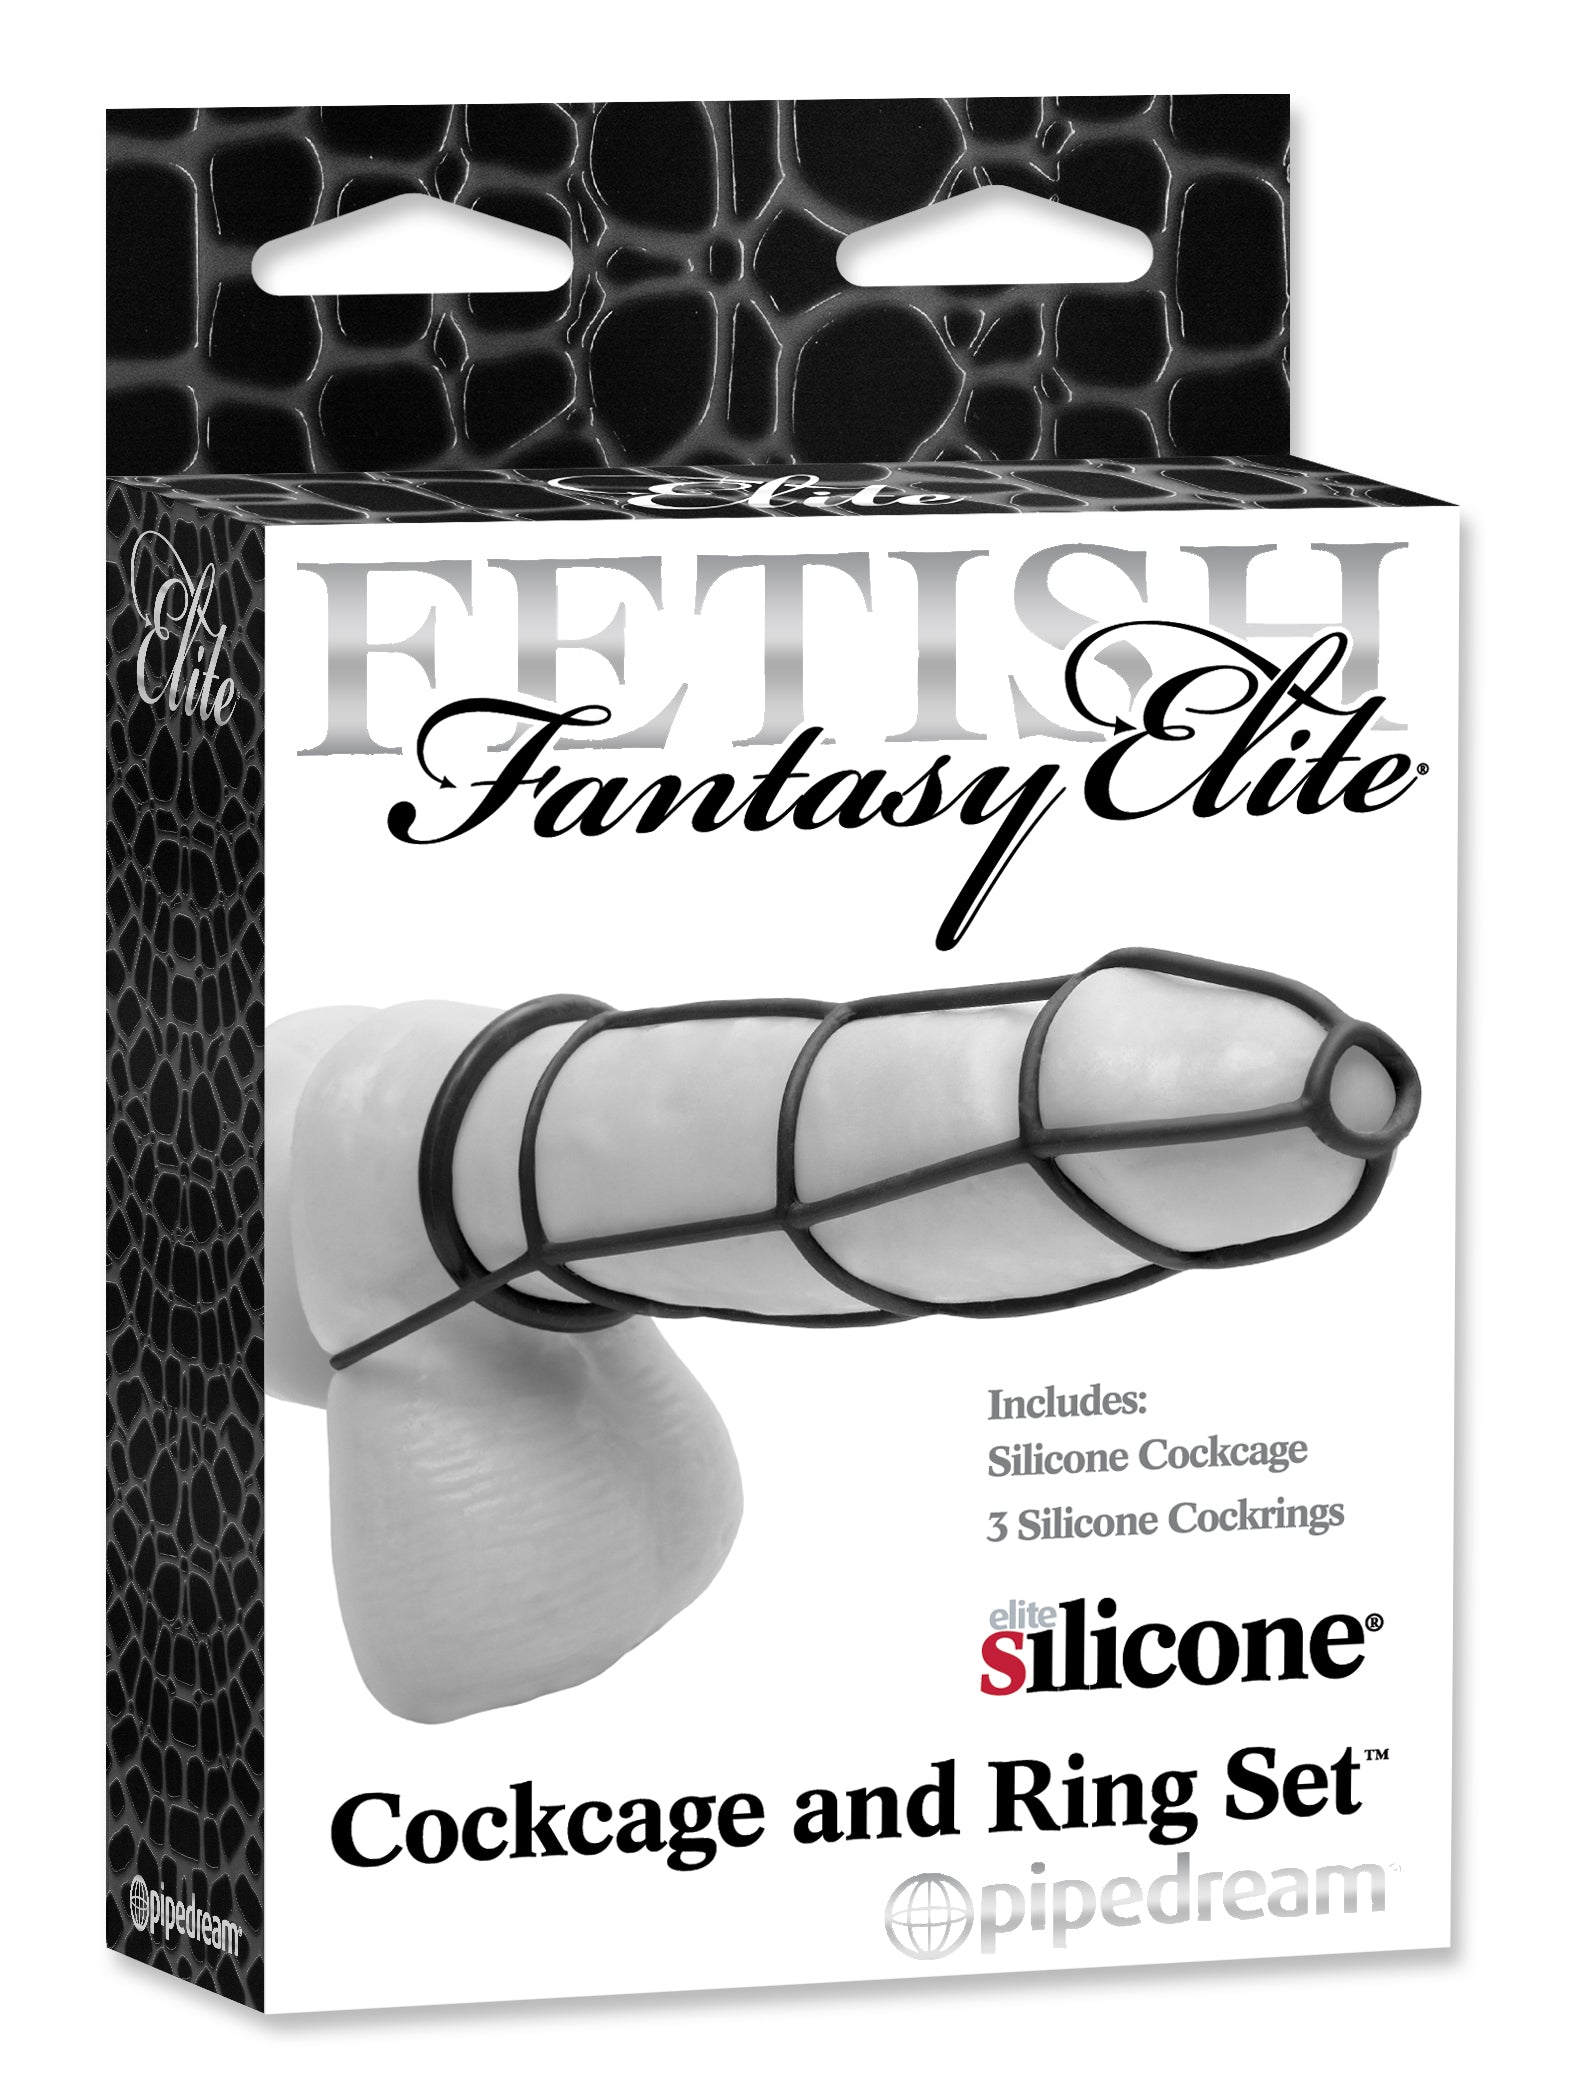 Fetish Fantasy Elite Cockcage & Ring Set Black